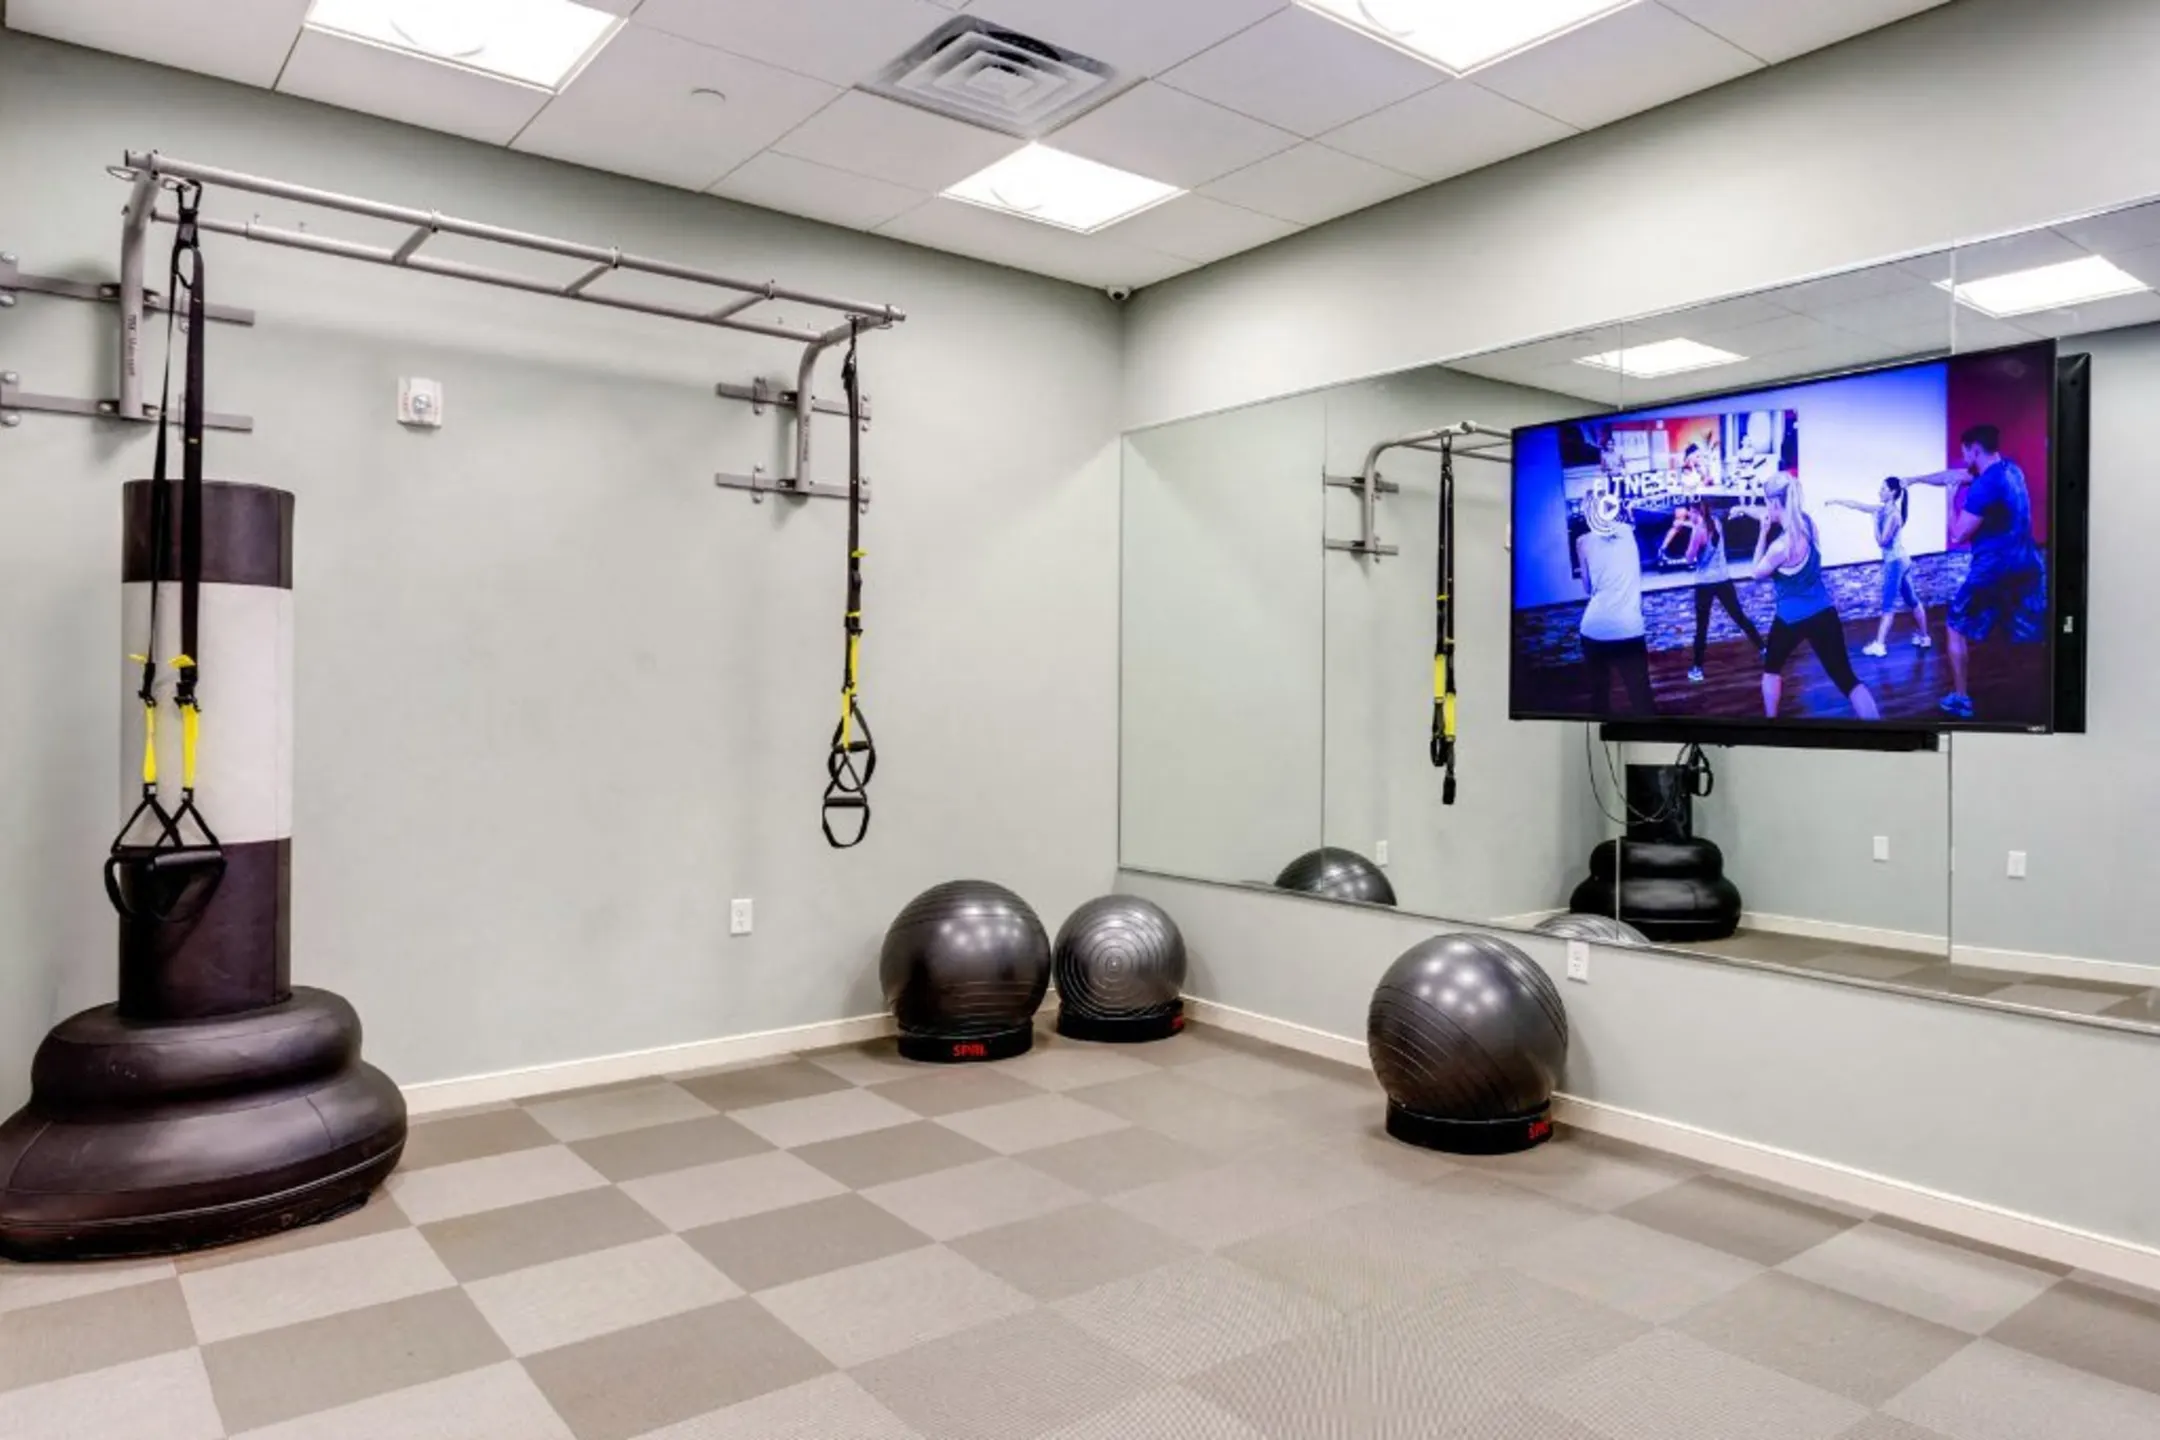 Fitness Weight Room - Venture Apartments iN Tech Center - Newport News, VA